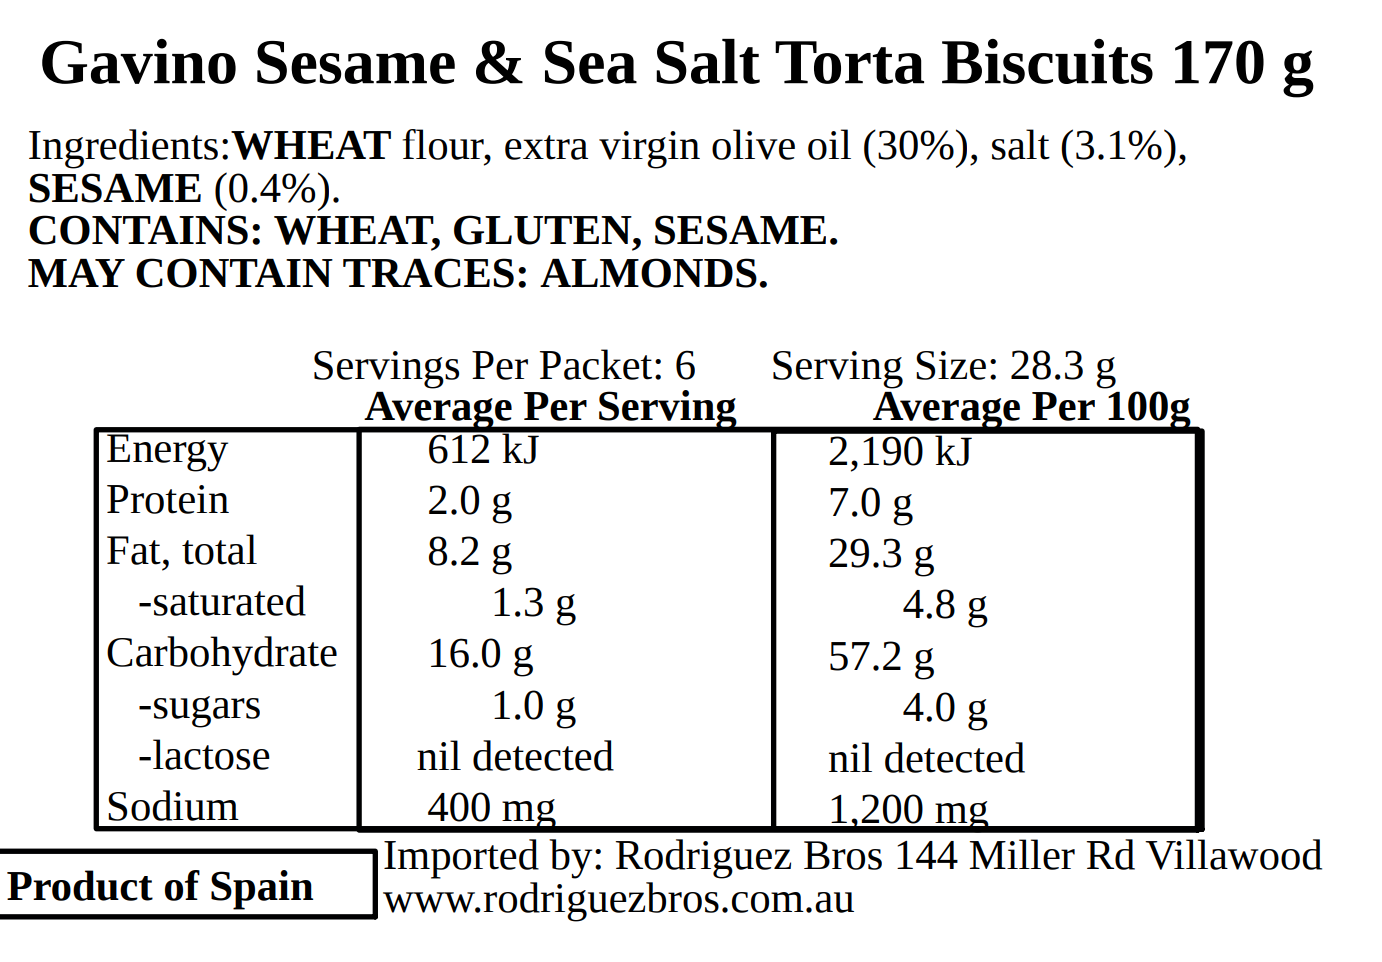 Andres Gavino Spanish Sesame and Sea Salt Tortas 170g Twin Pack 340g Total